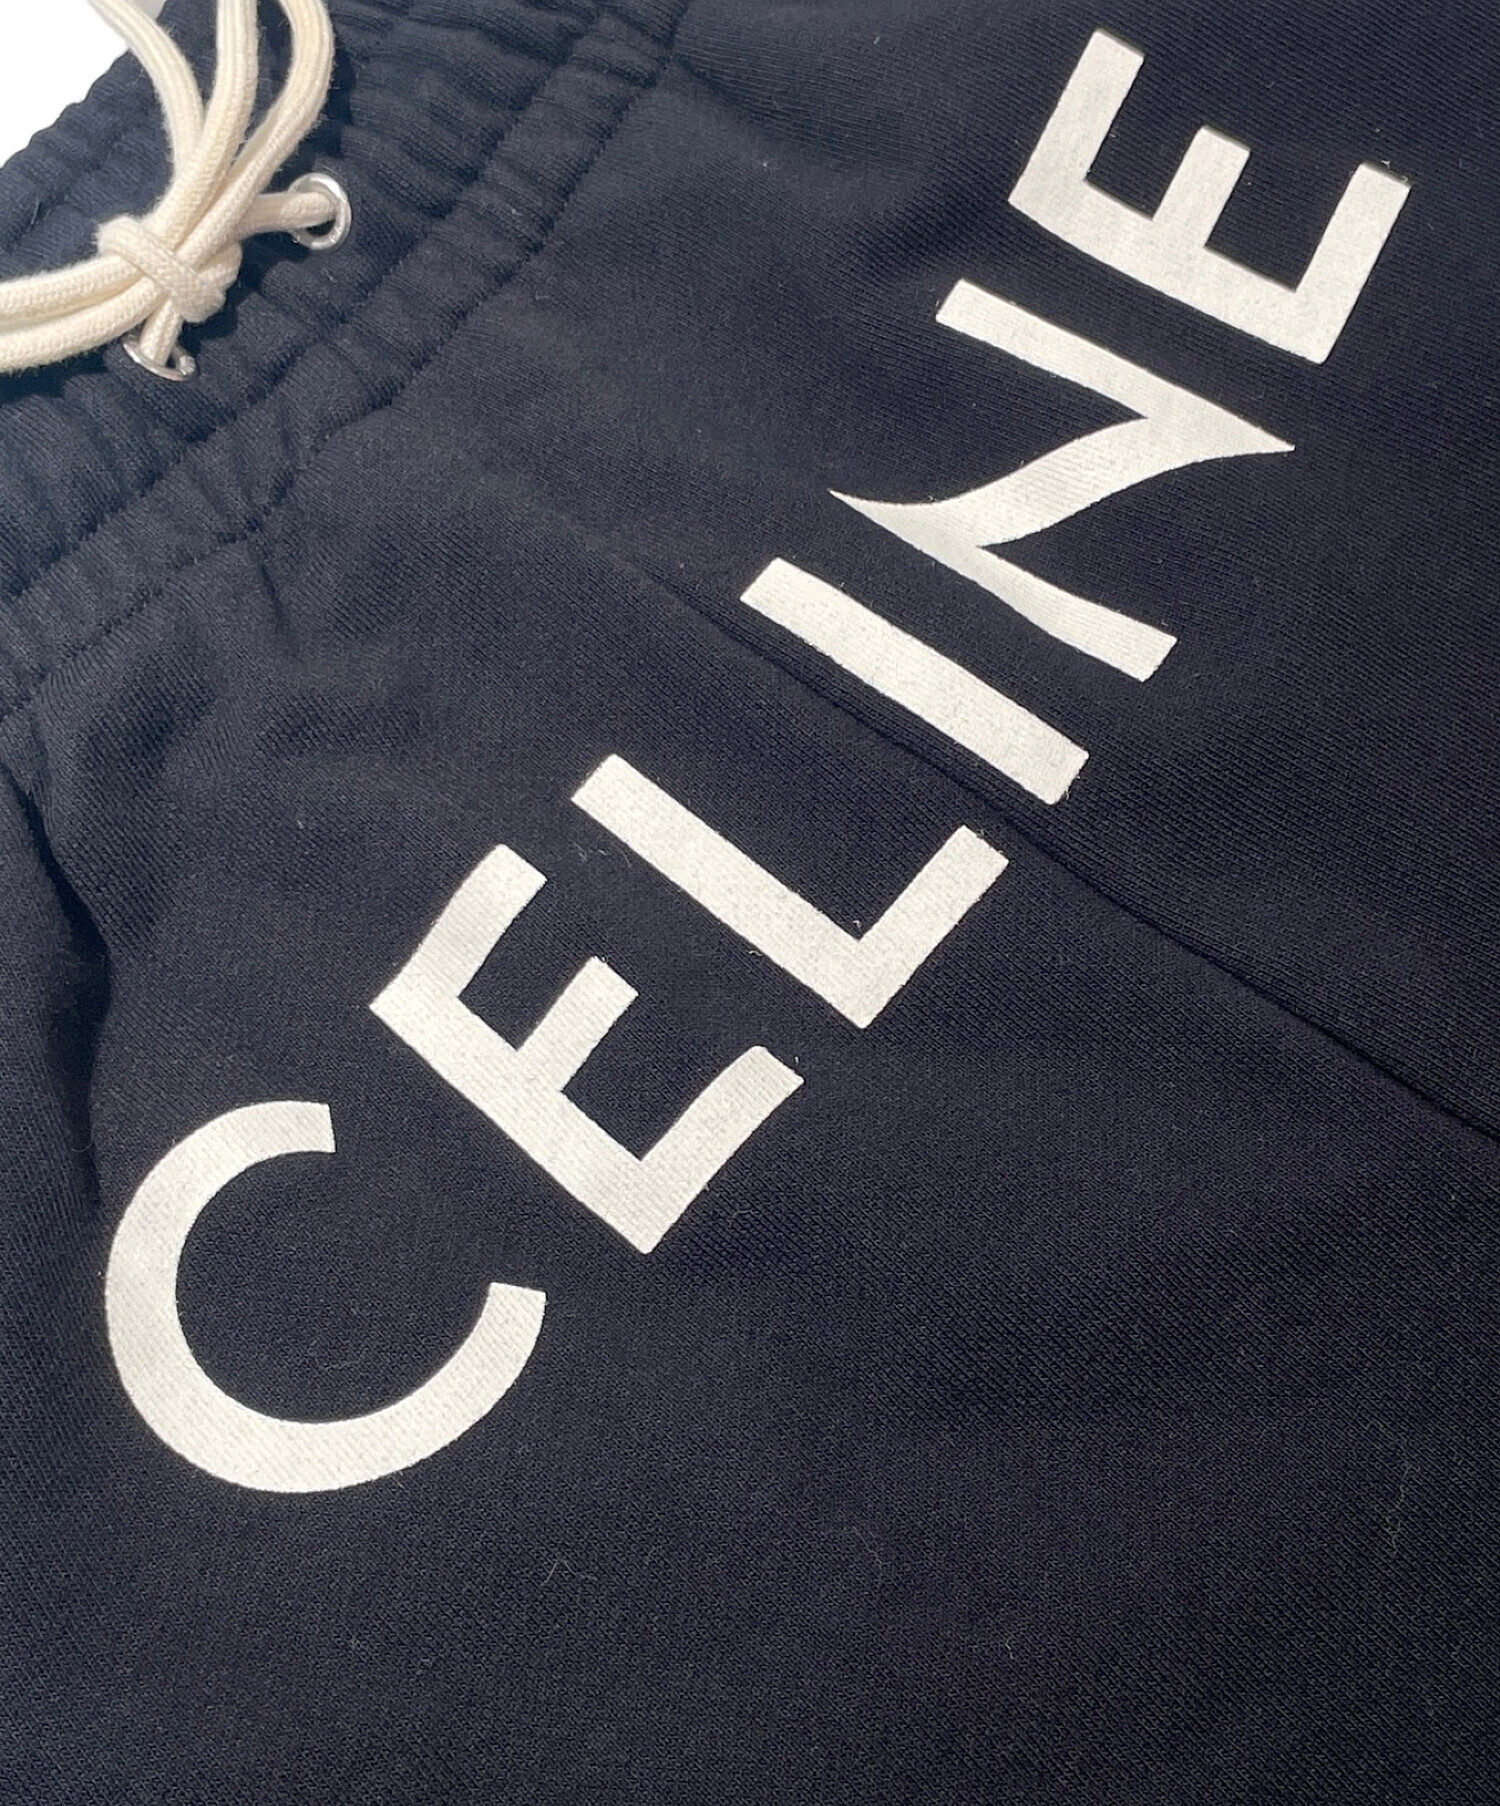 CELINE (セリーヌ) CELINE ロゴスウェット ジョガー パンツ ブラック サイズ:L